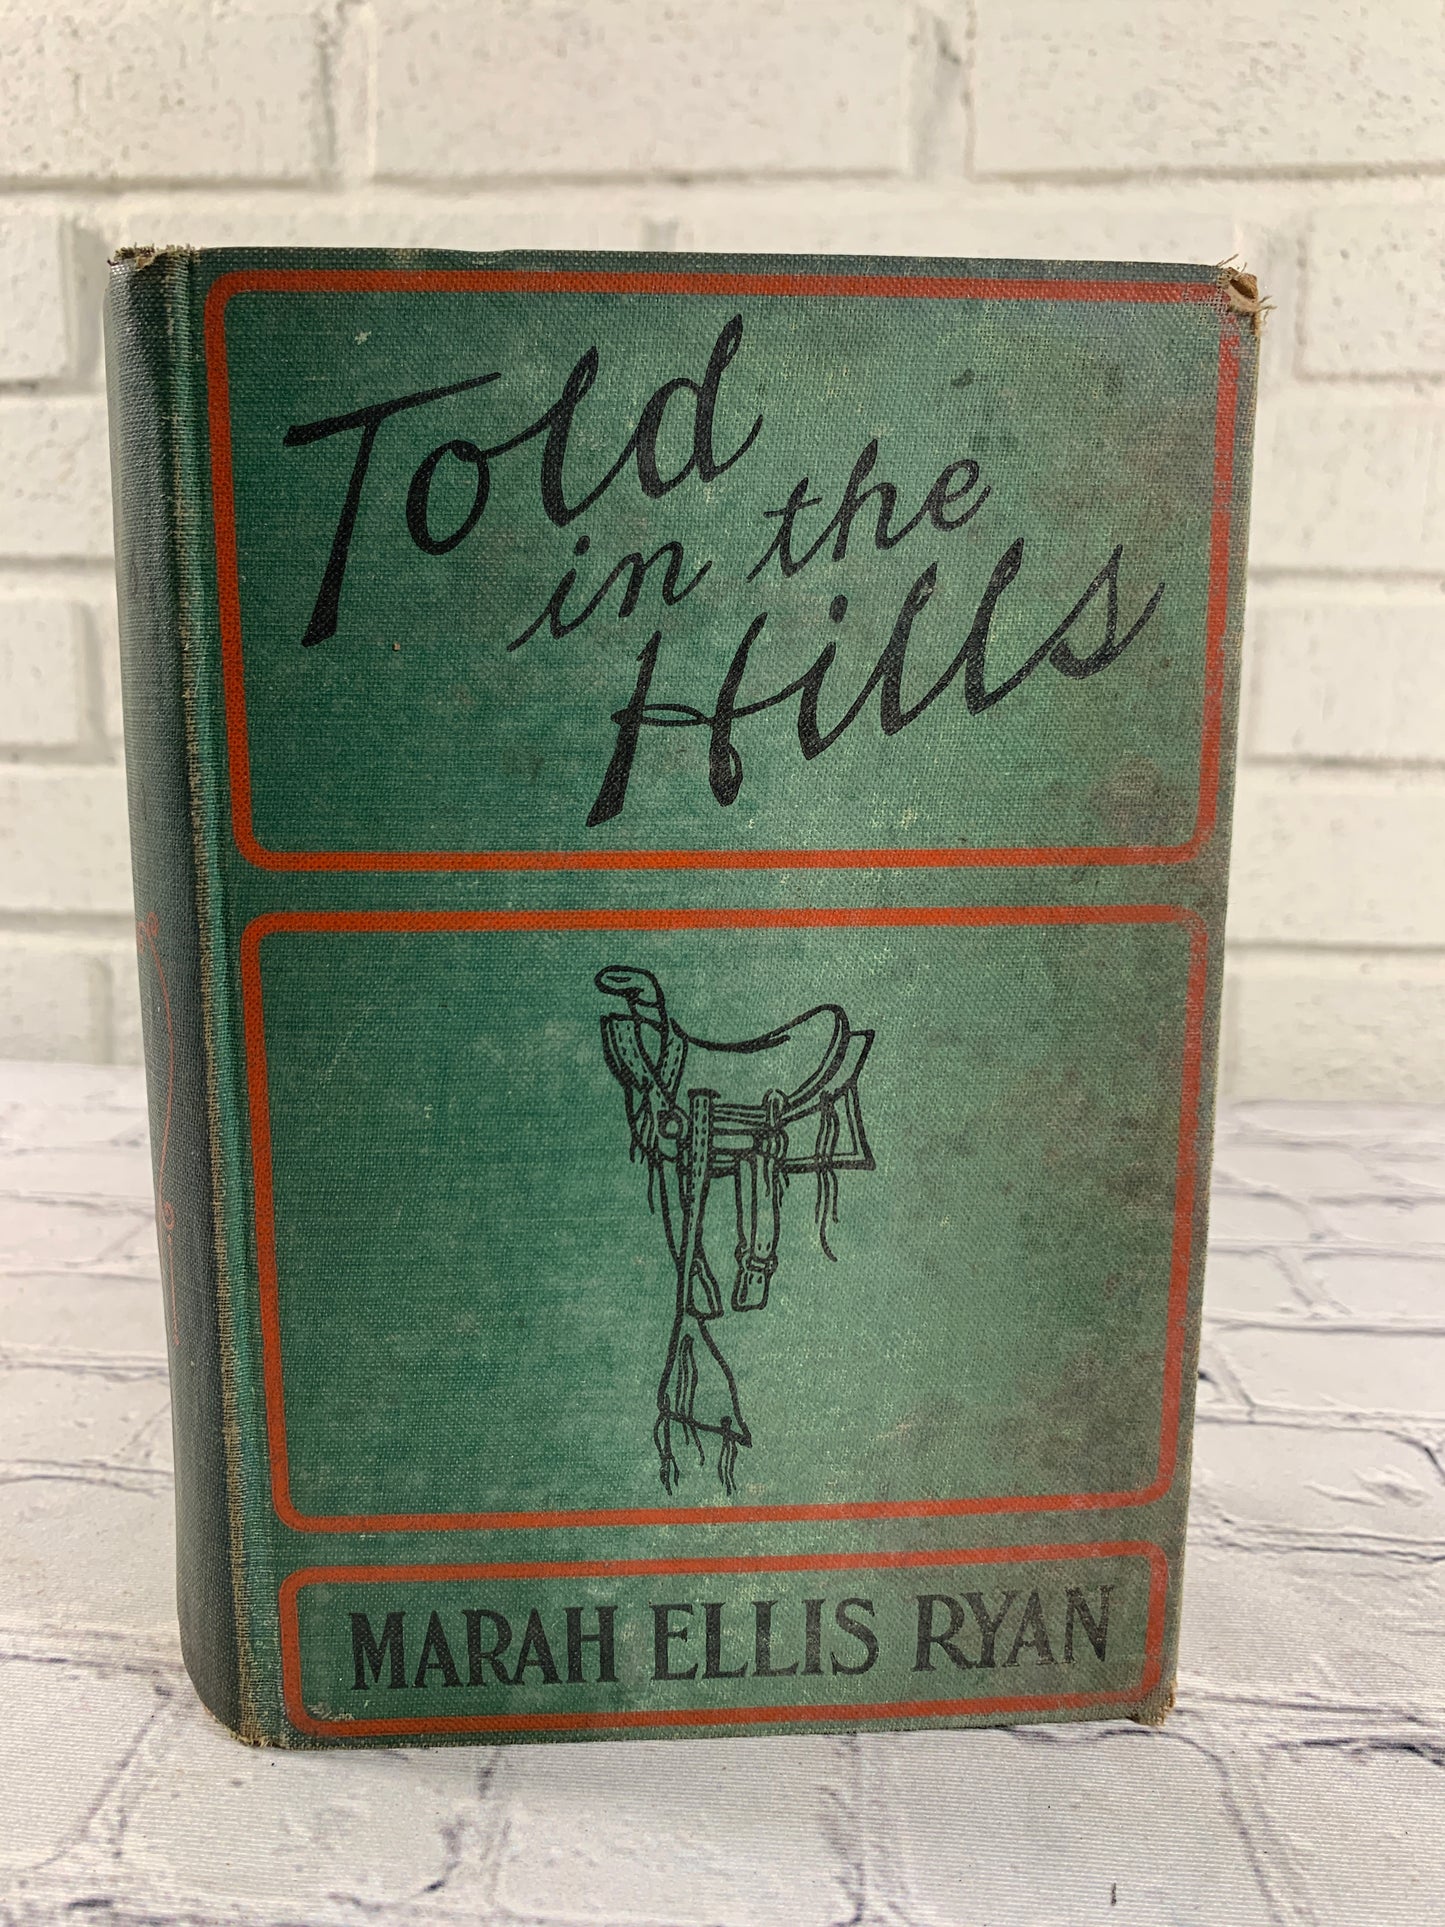 Told in the Hills by Marah Ellis Ryan [1905]